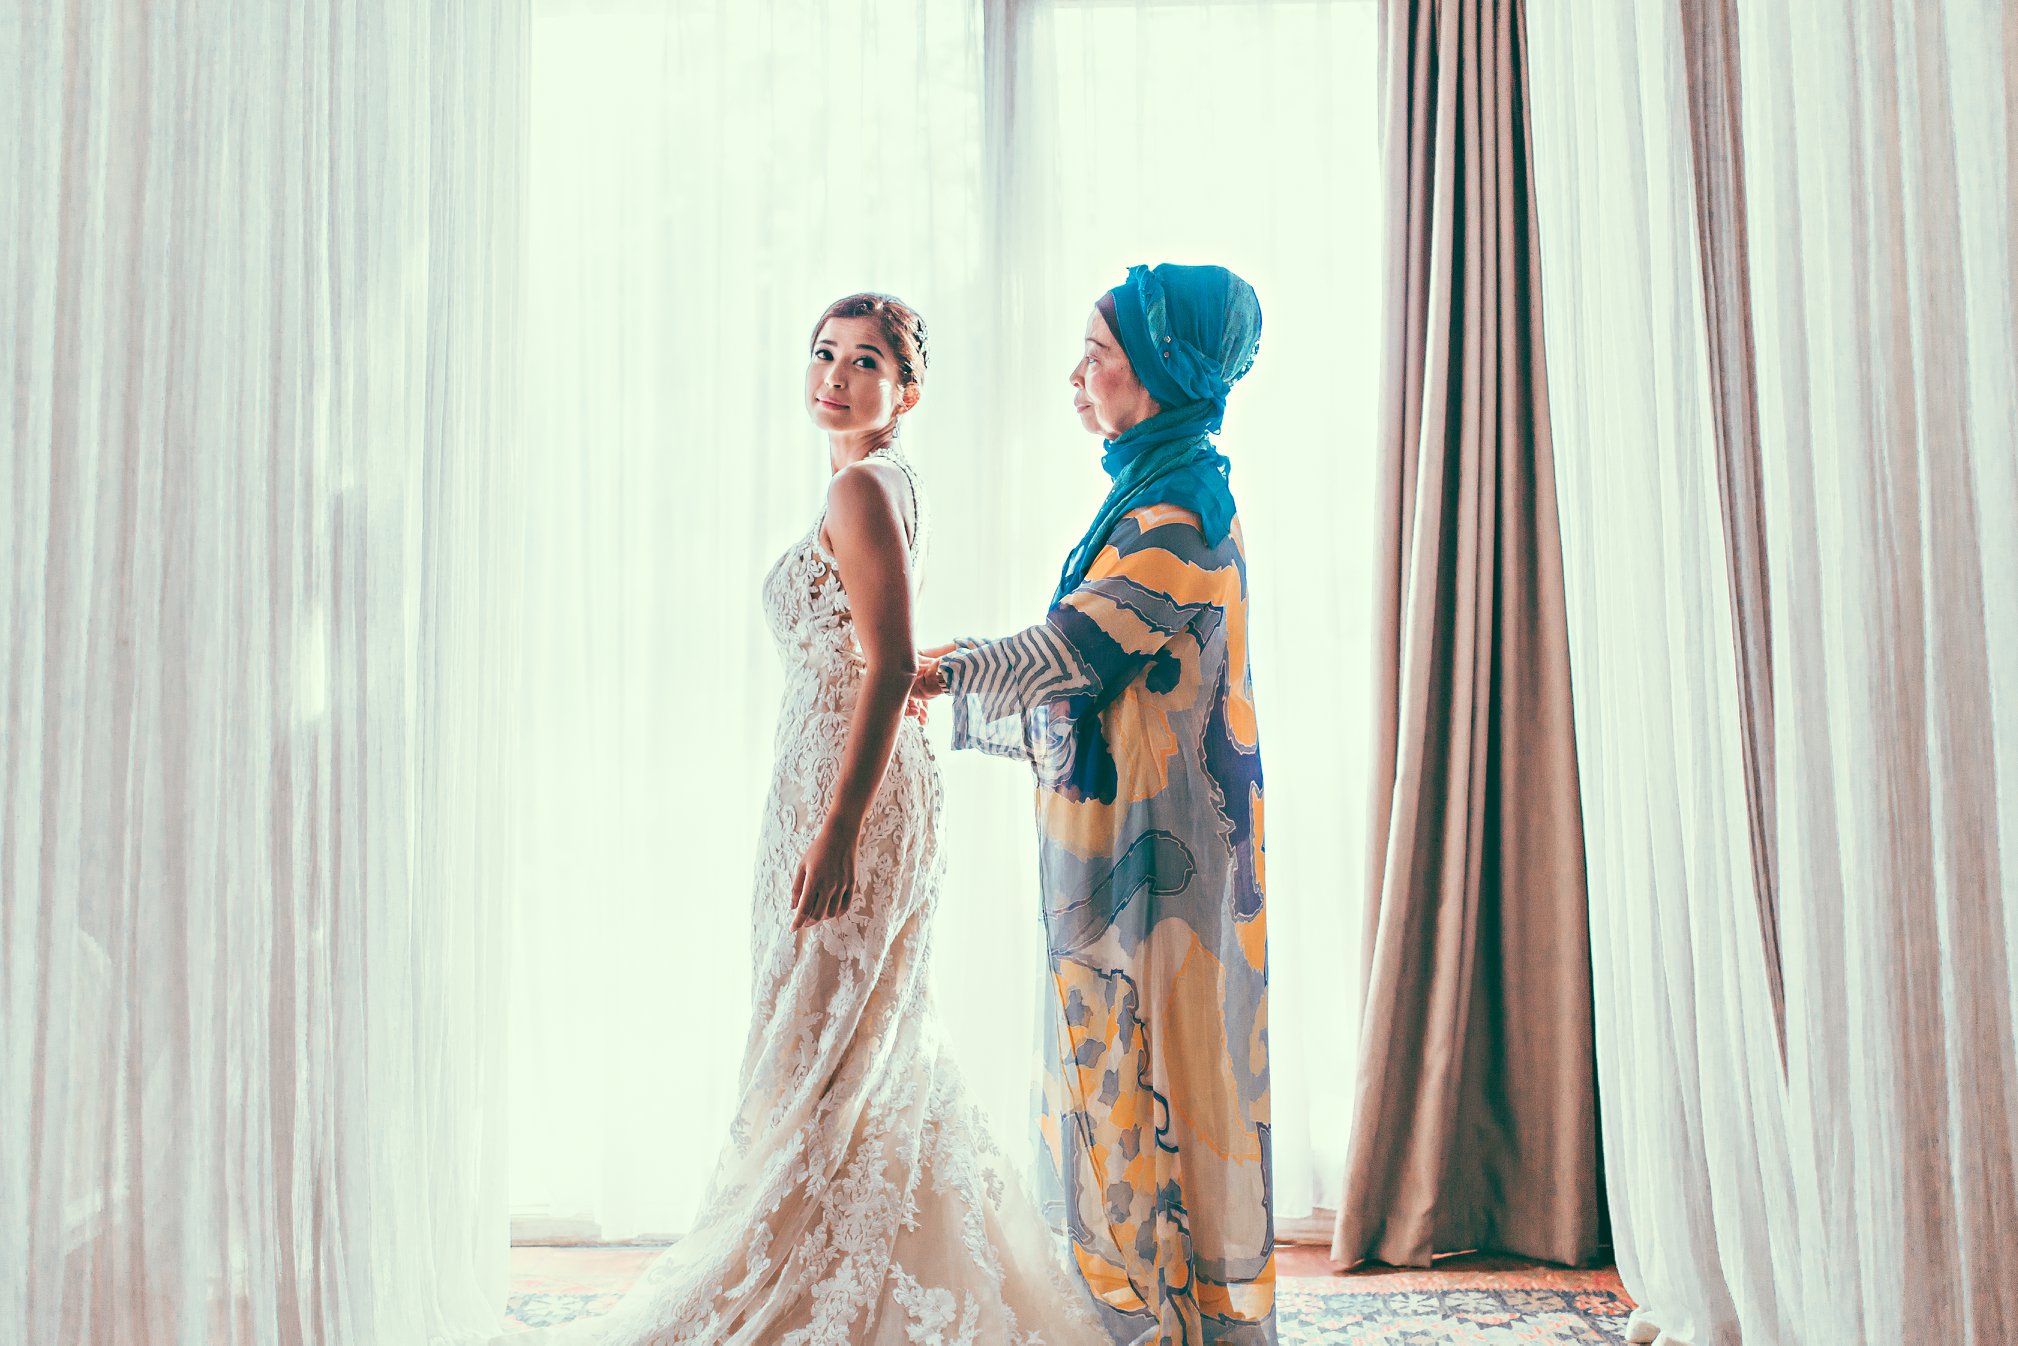 Balinese female wedding photographer